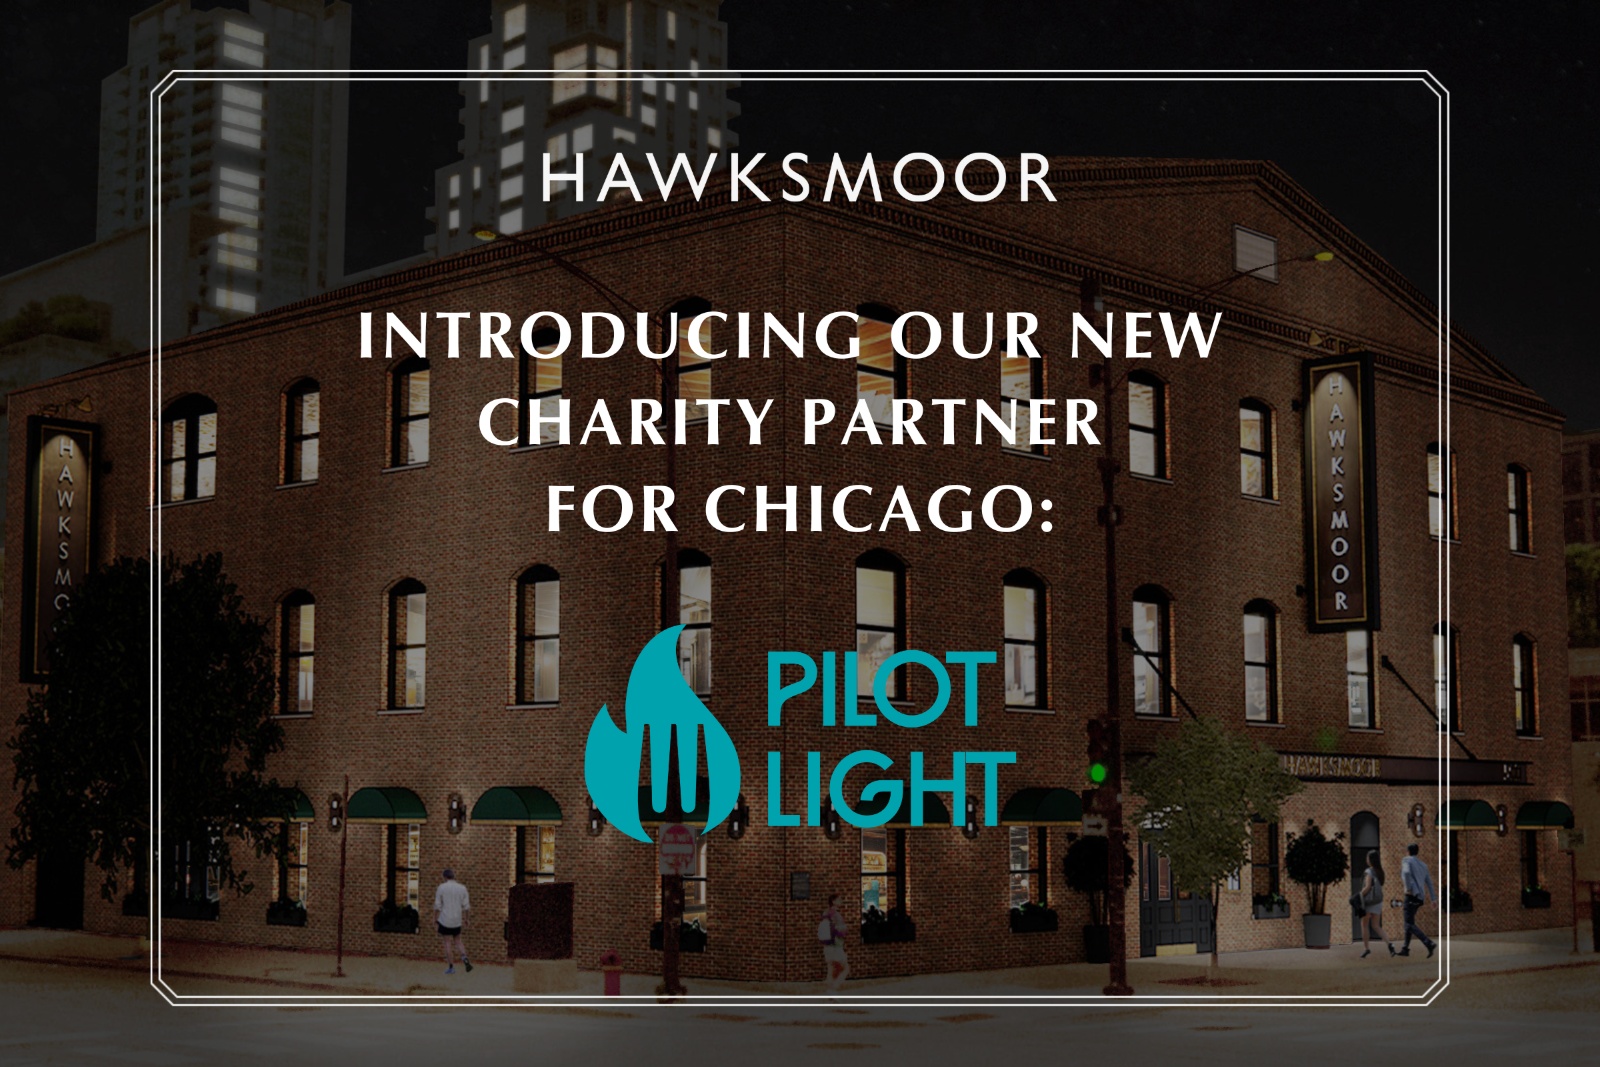 Pilot Light - Hawksmoor Chicago Charity Partner